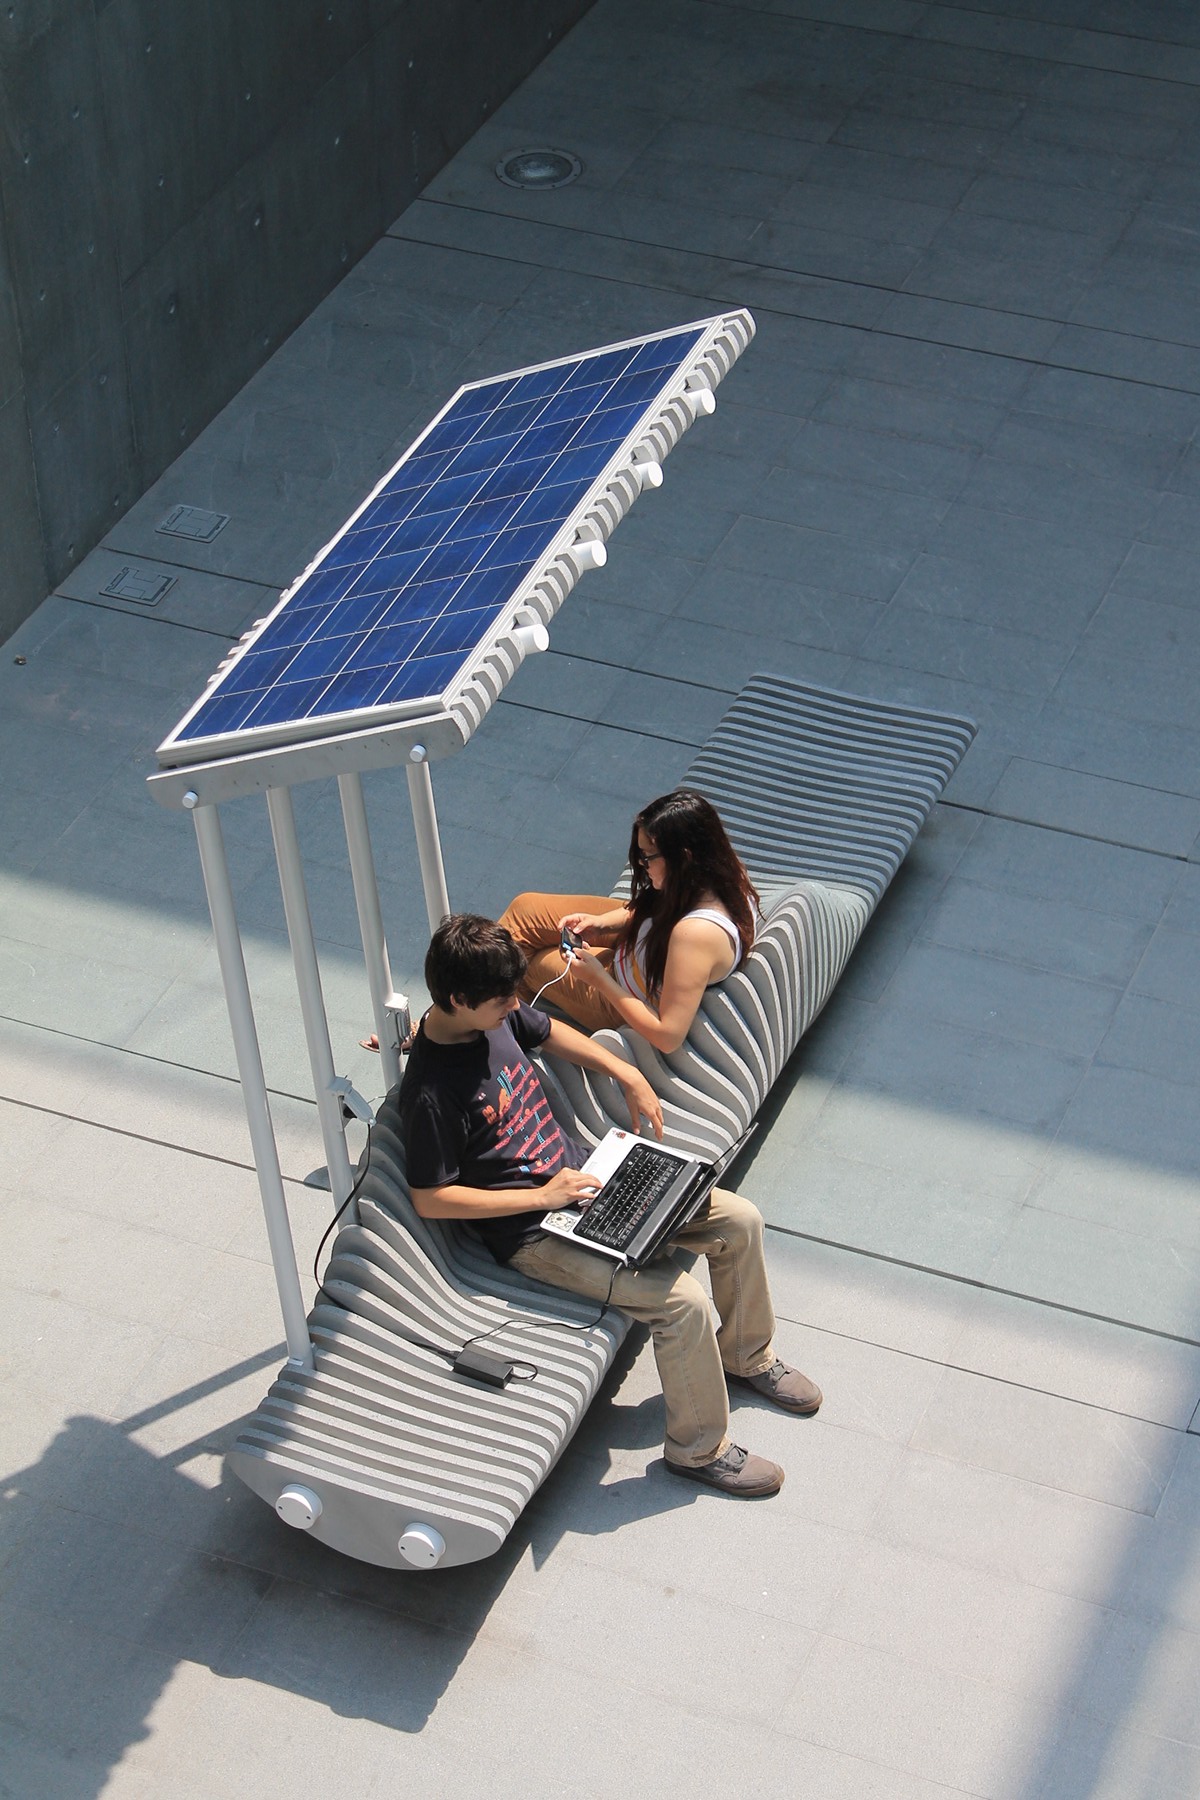 bench outdoors concrete solar power furniture seating mobiliario cemento Energia Solar sustentable Mobiliario exterior Paisajismo